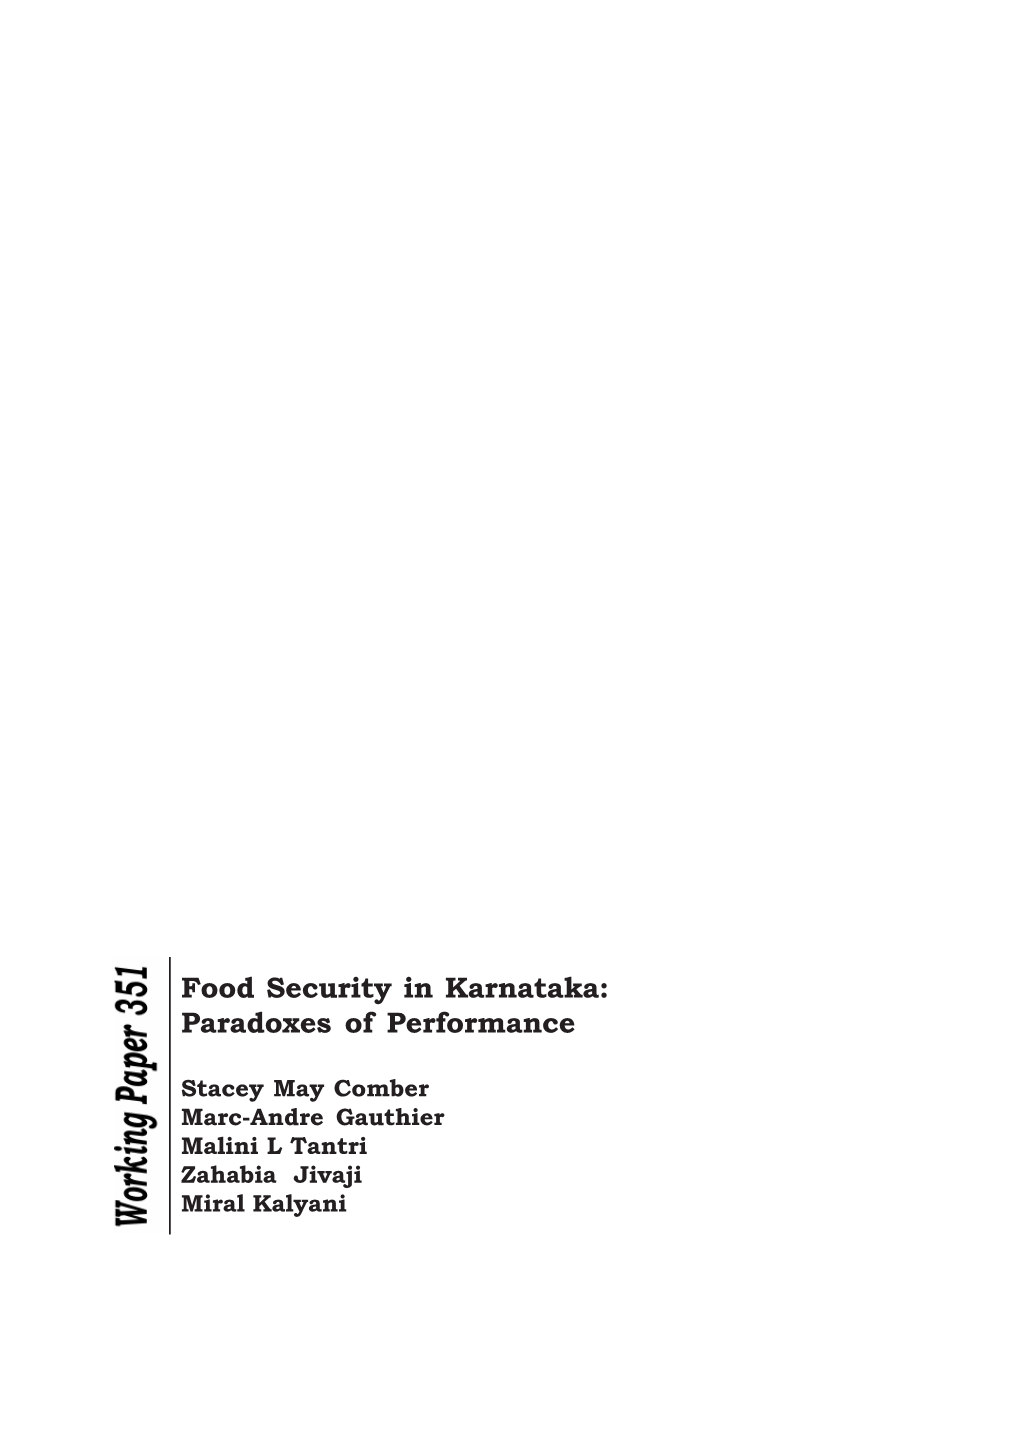 Food Security in Karnataka: Paradoxes of Performance